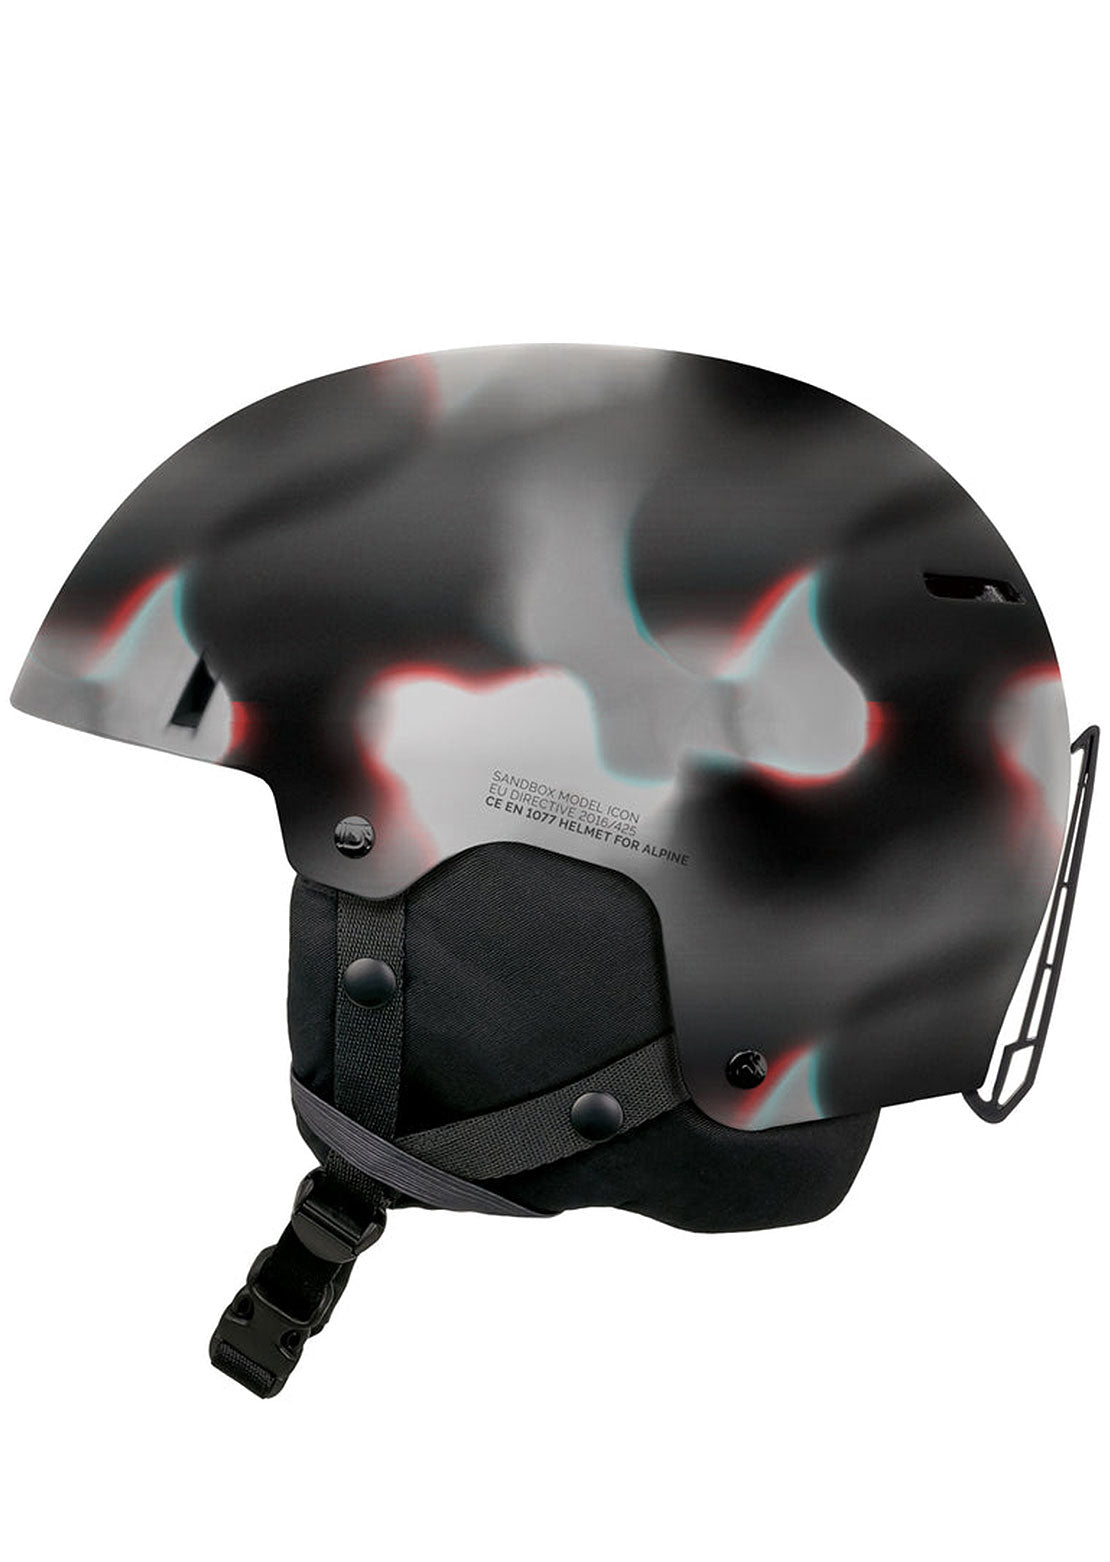 Sandbox Unisex Icon Snow Winter Helmet Solar